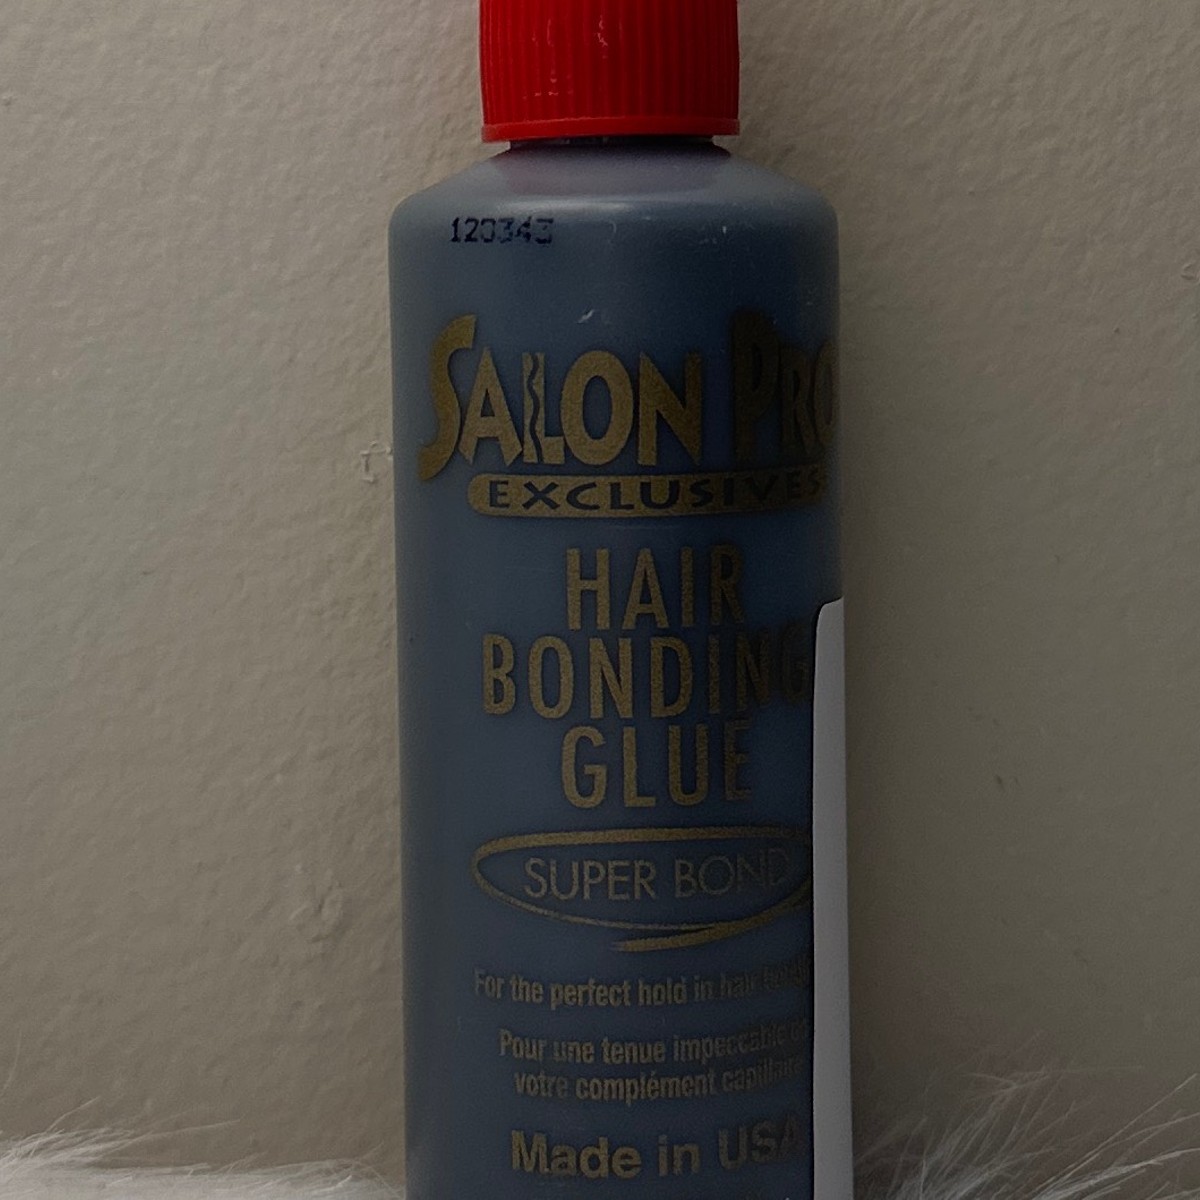 Salon Pro Exclusives Hair Bonding Kits